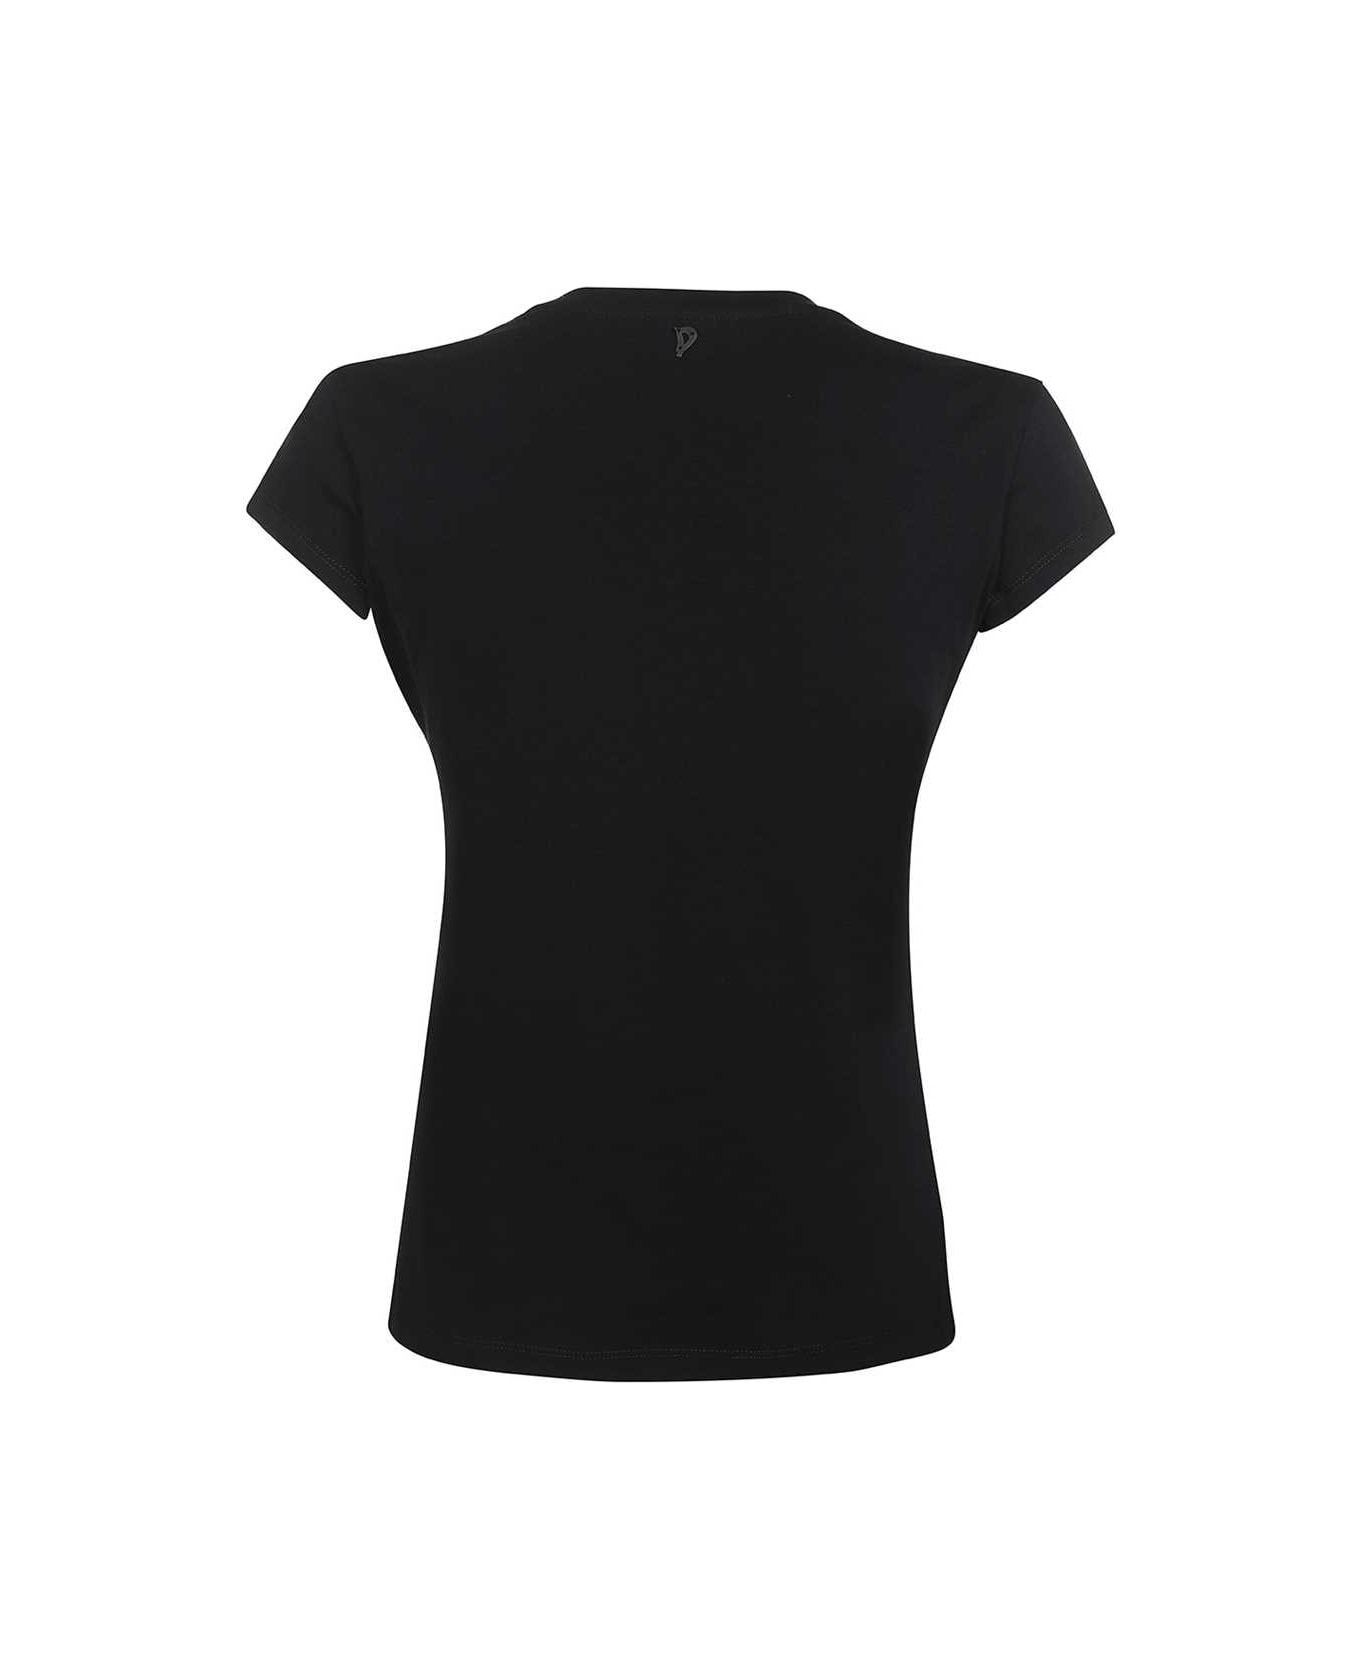 Dondup V-neck T-shirt - black Tシャツ